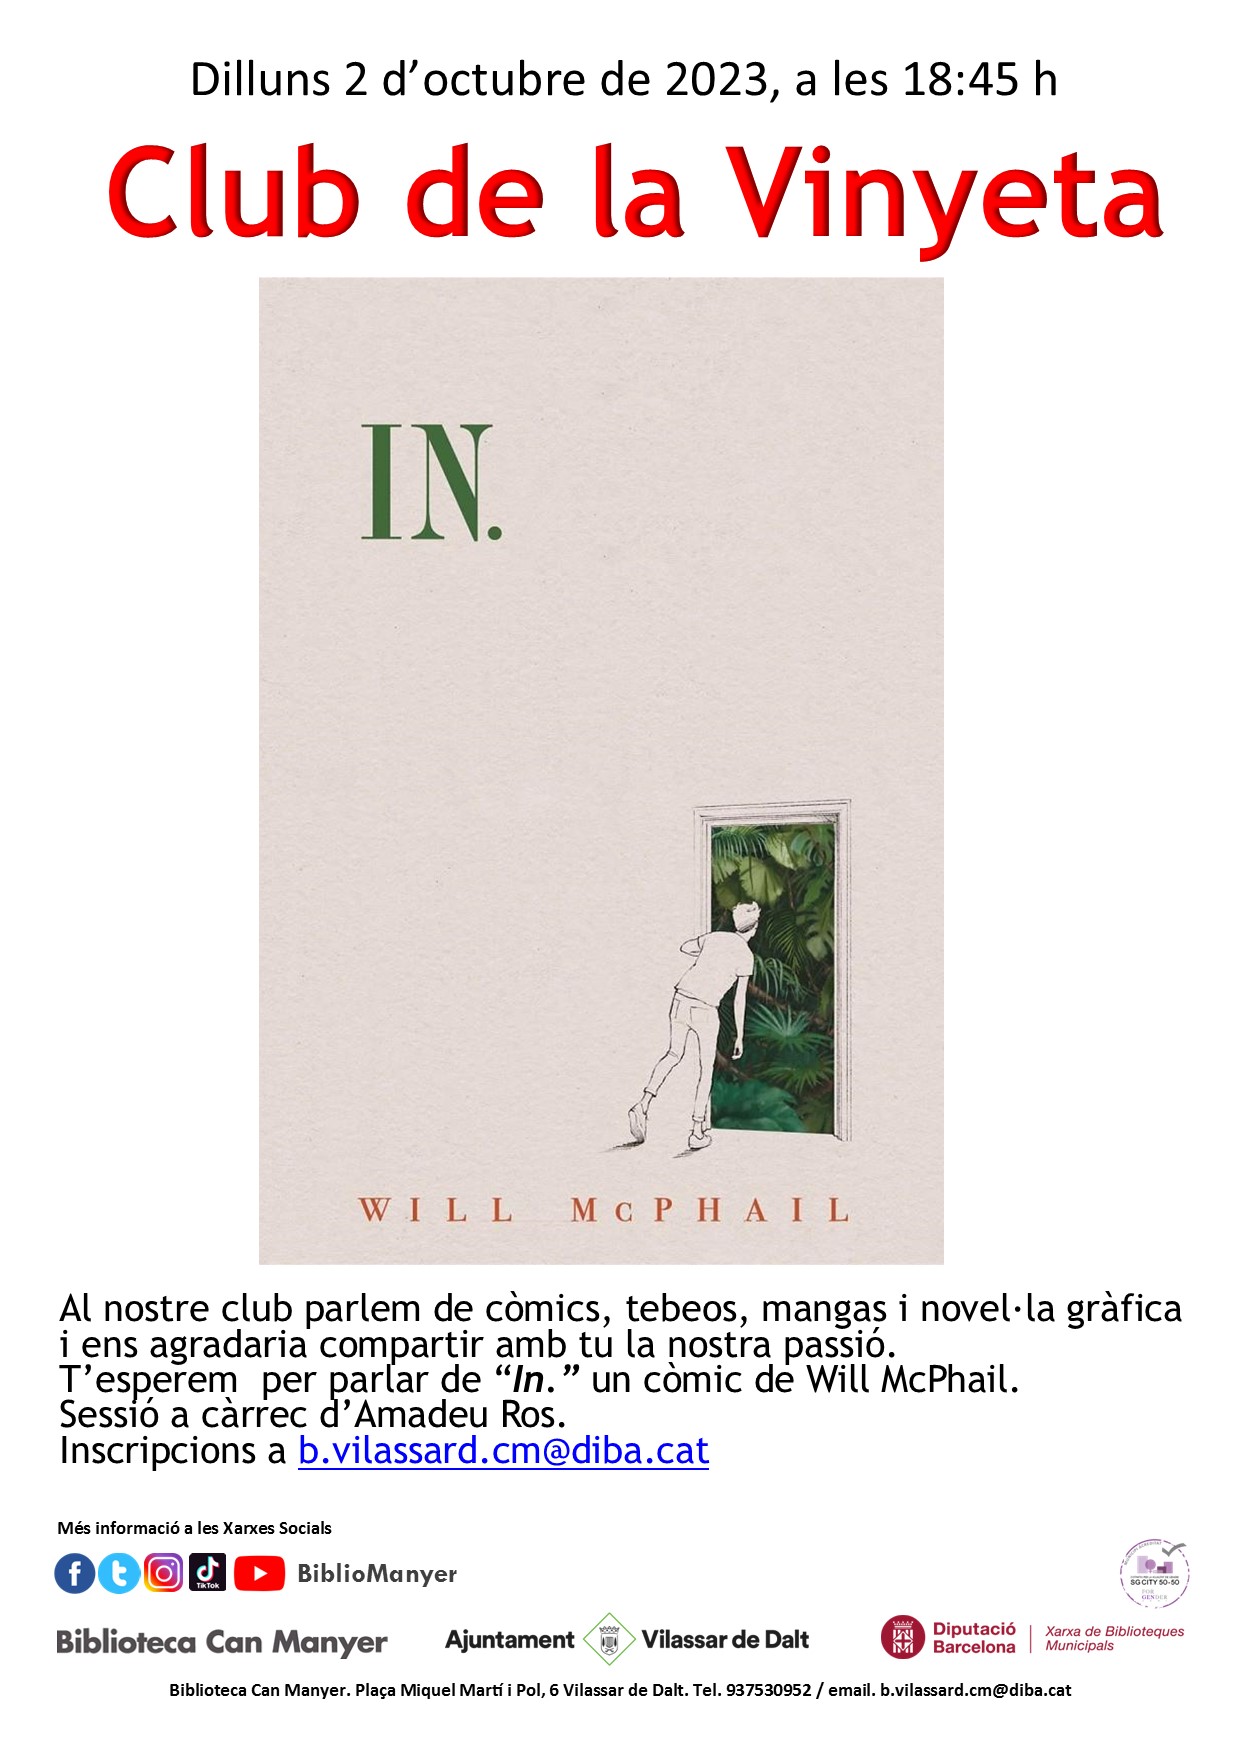 Club de la vinyeta: In de Will McPhail